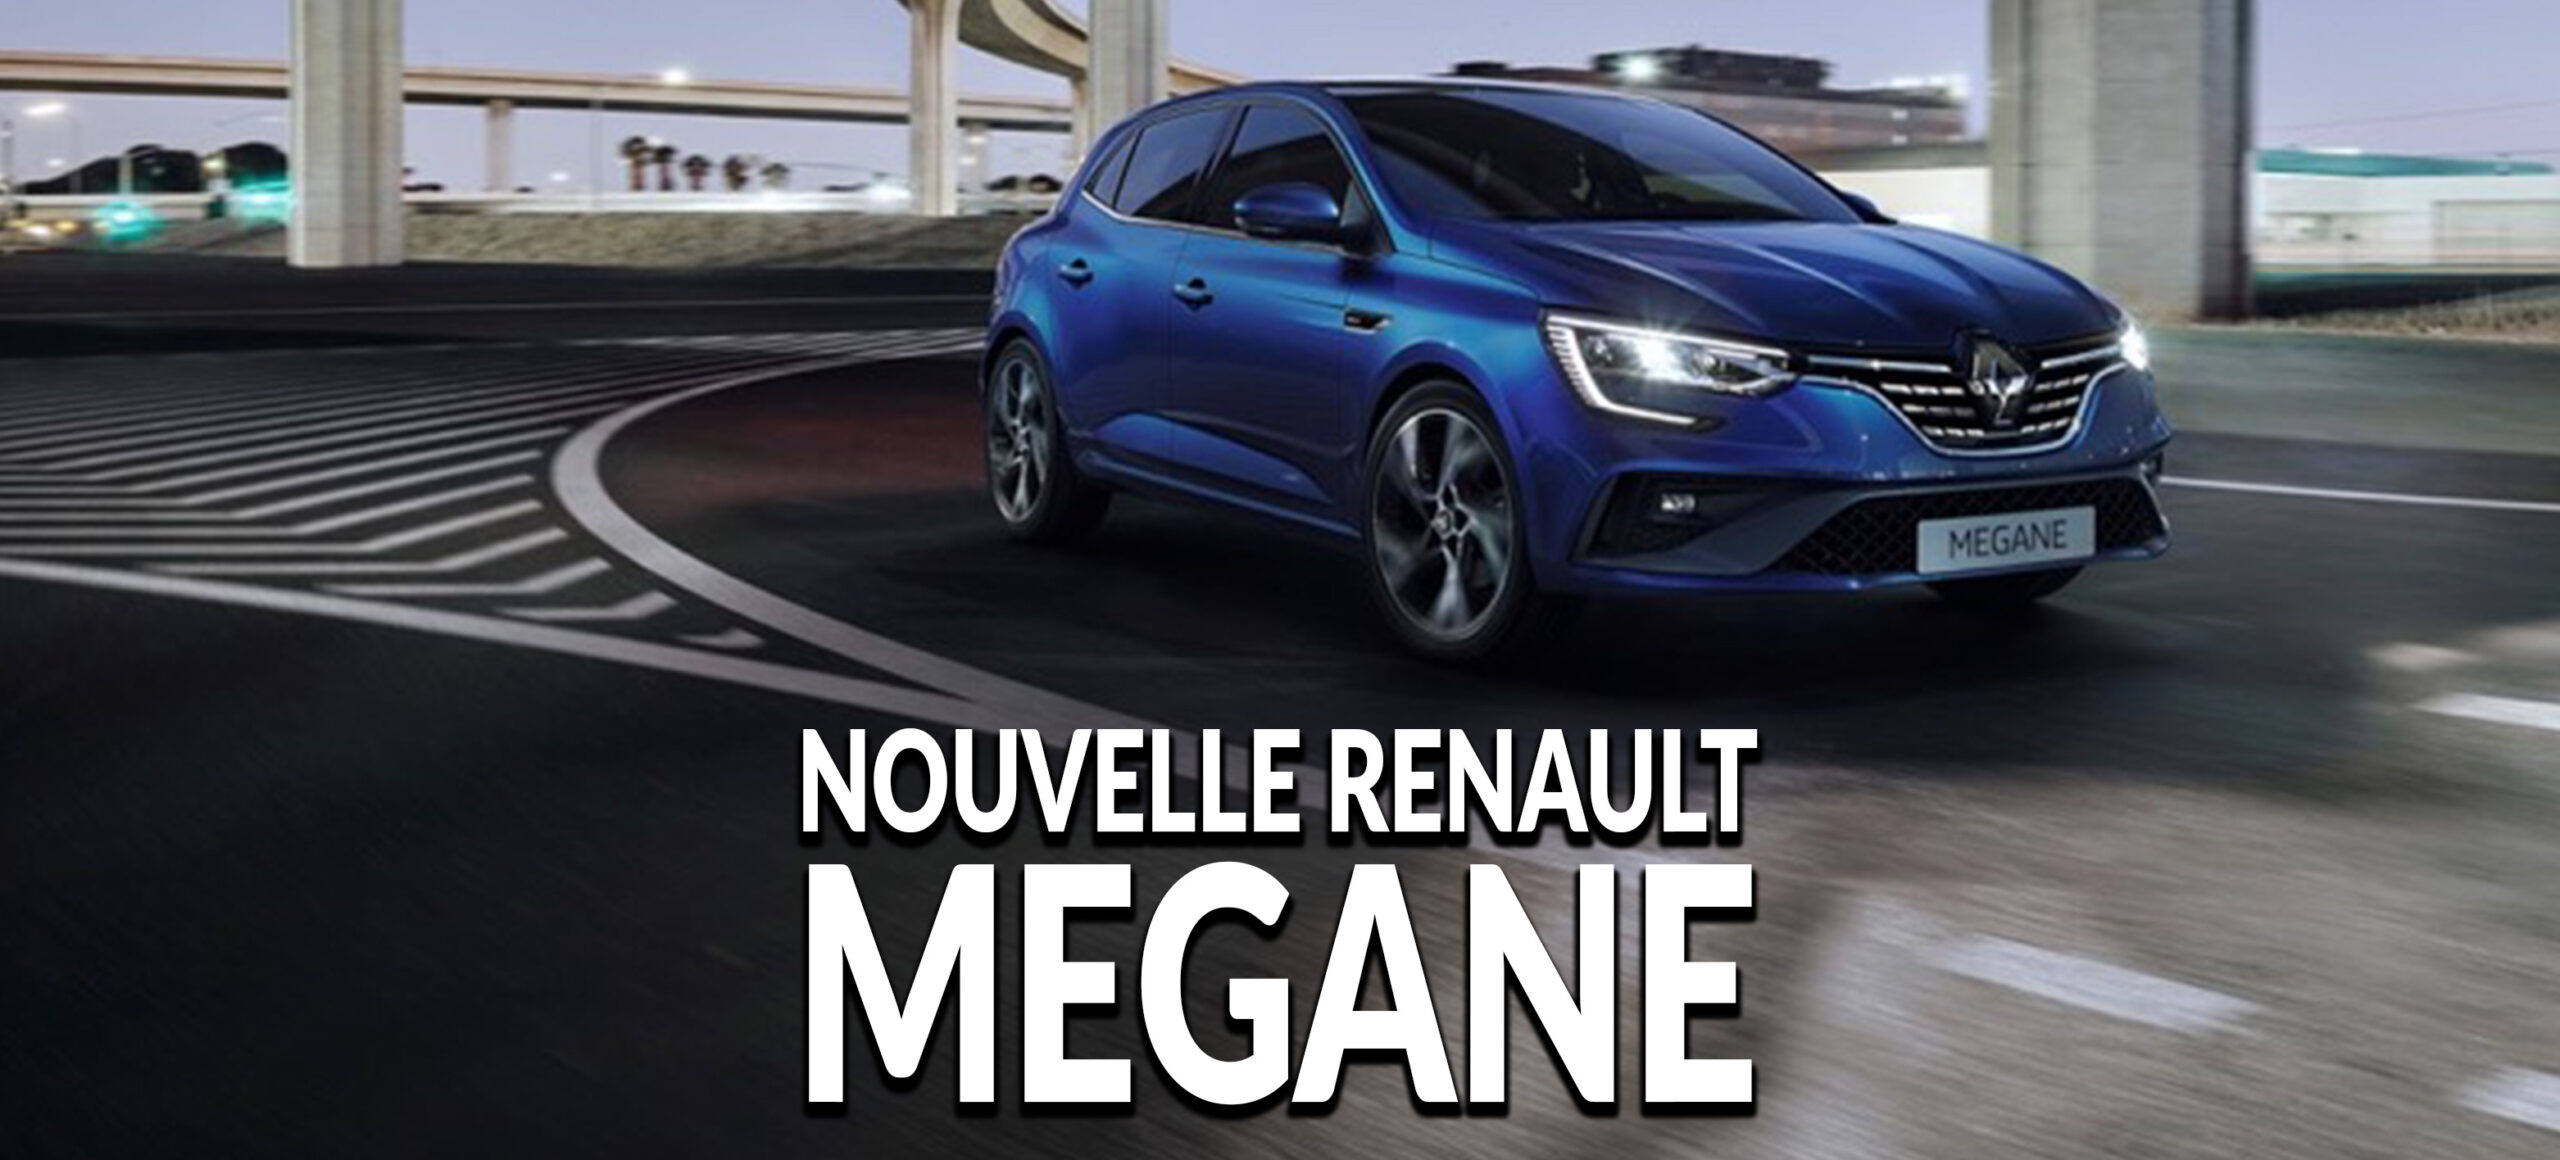 Renault Megane restylée : une version hybride en plus !